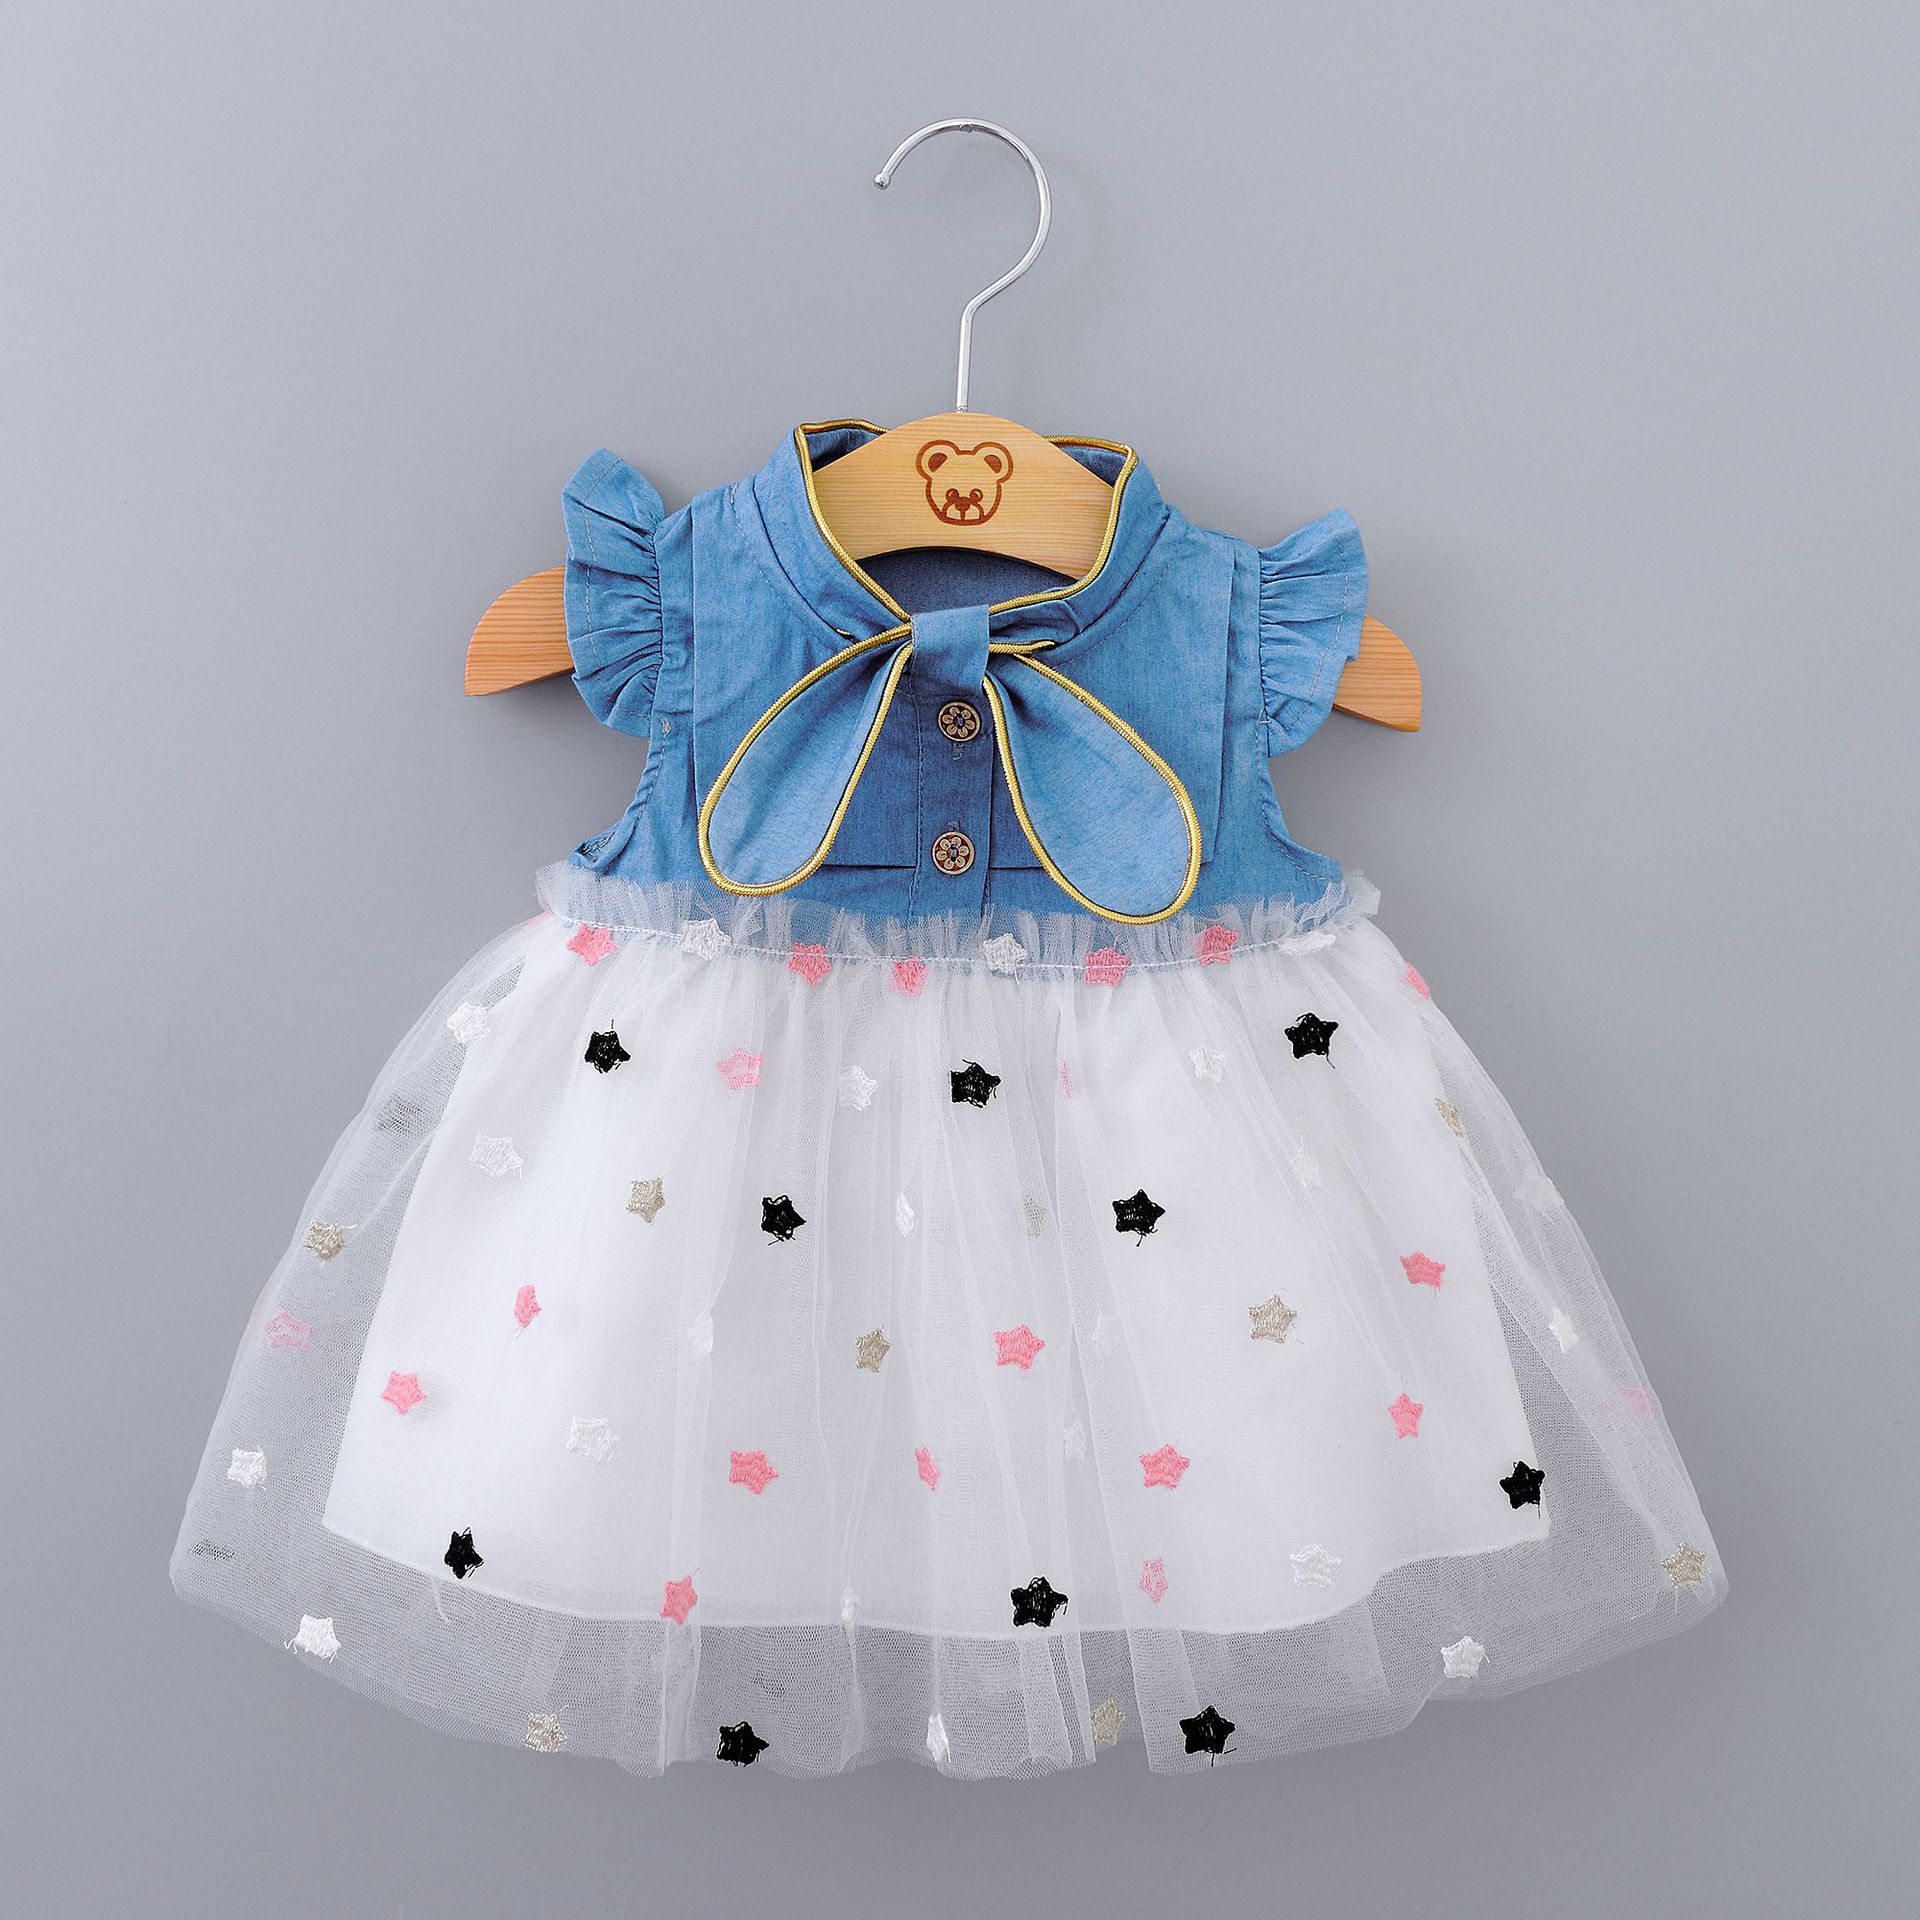 Baby Tutu Dress Toddler Party Dress